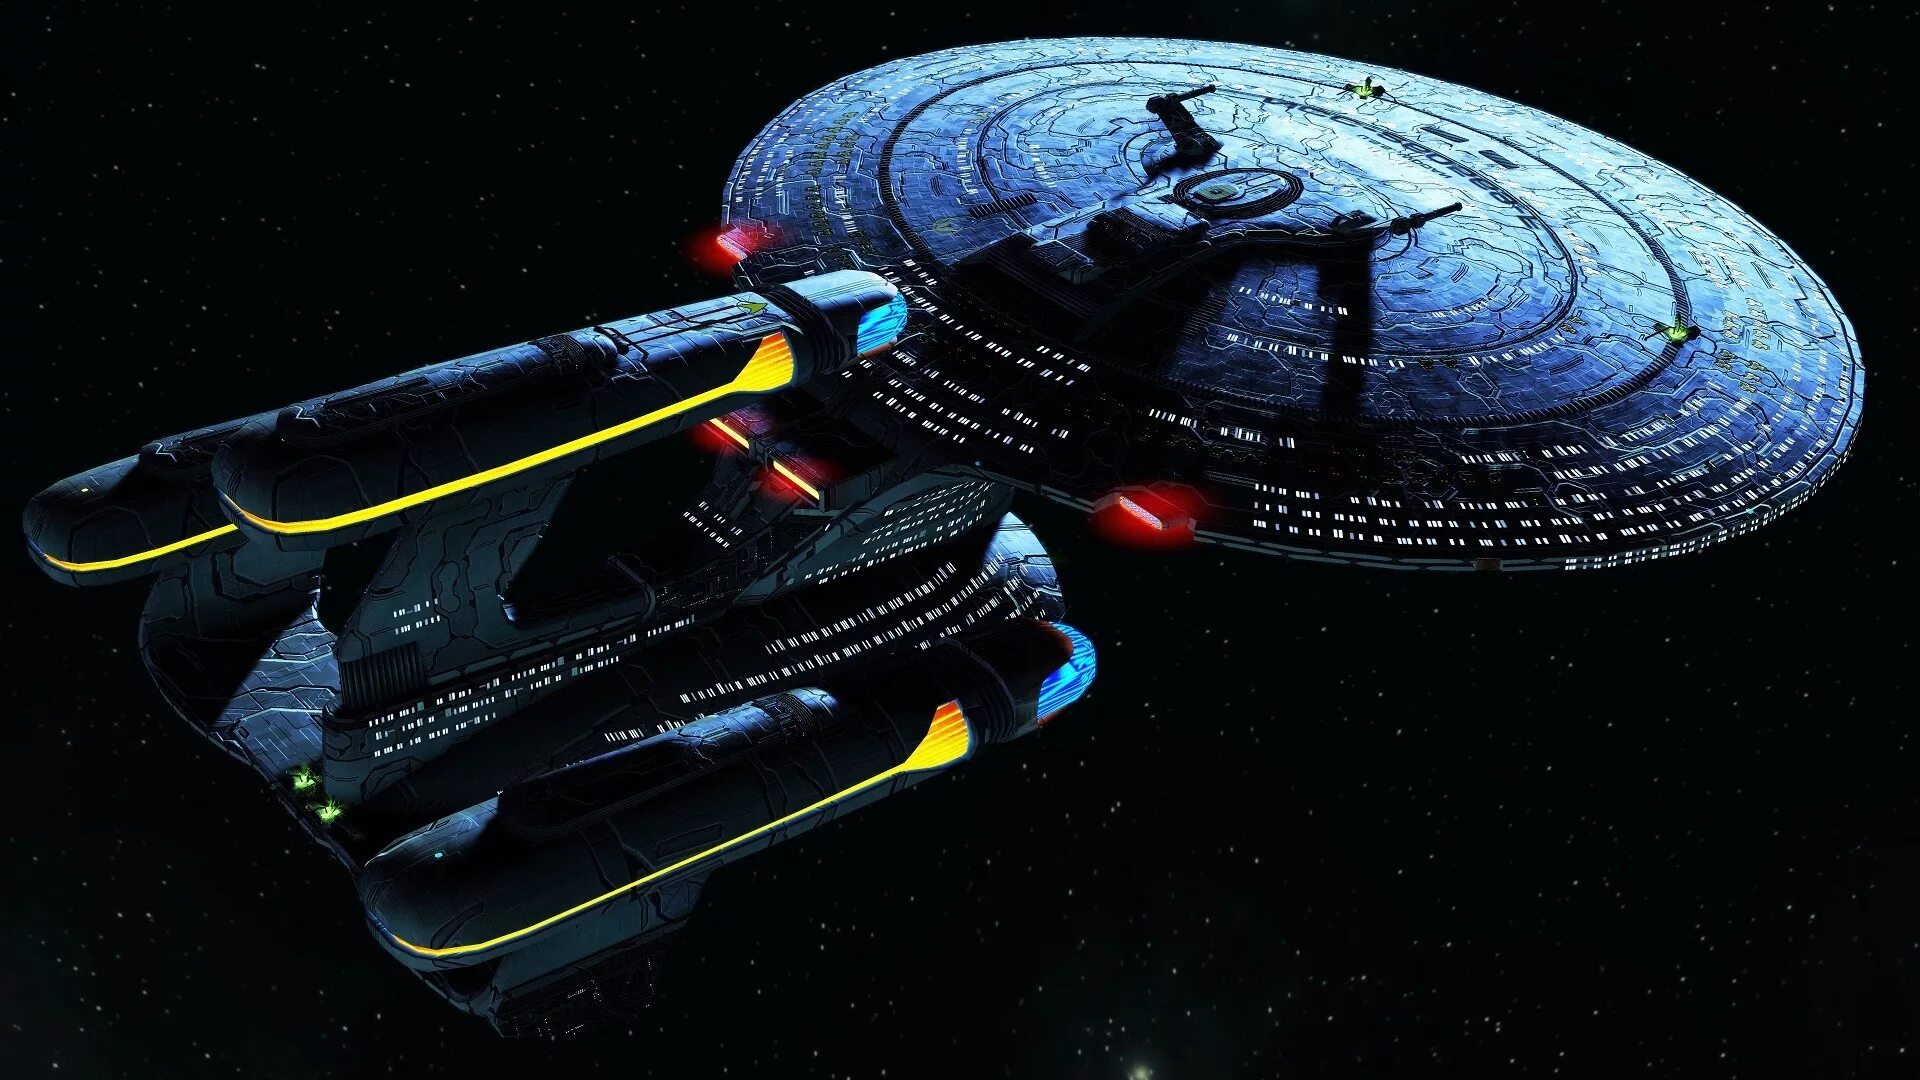 Starship космический корабль. Космические корабли Стартрек. Galaxy class Starship. Star Trek Galaxy class.